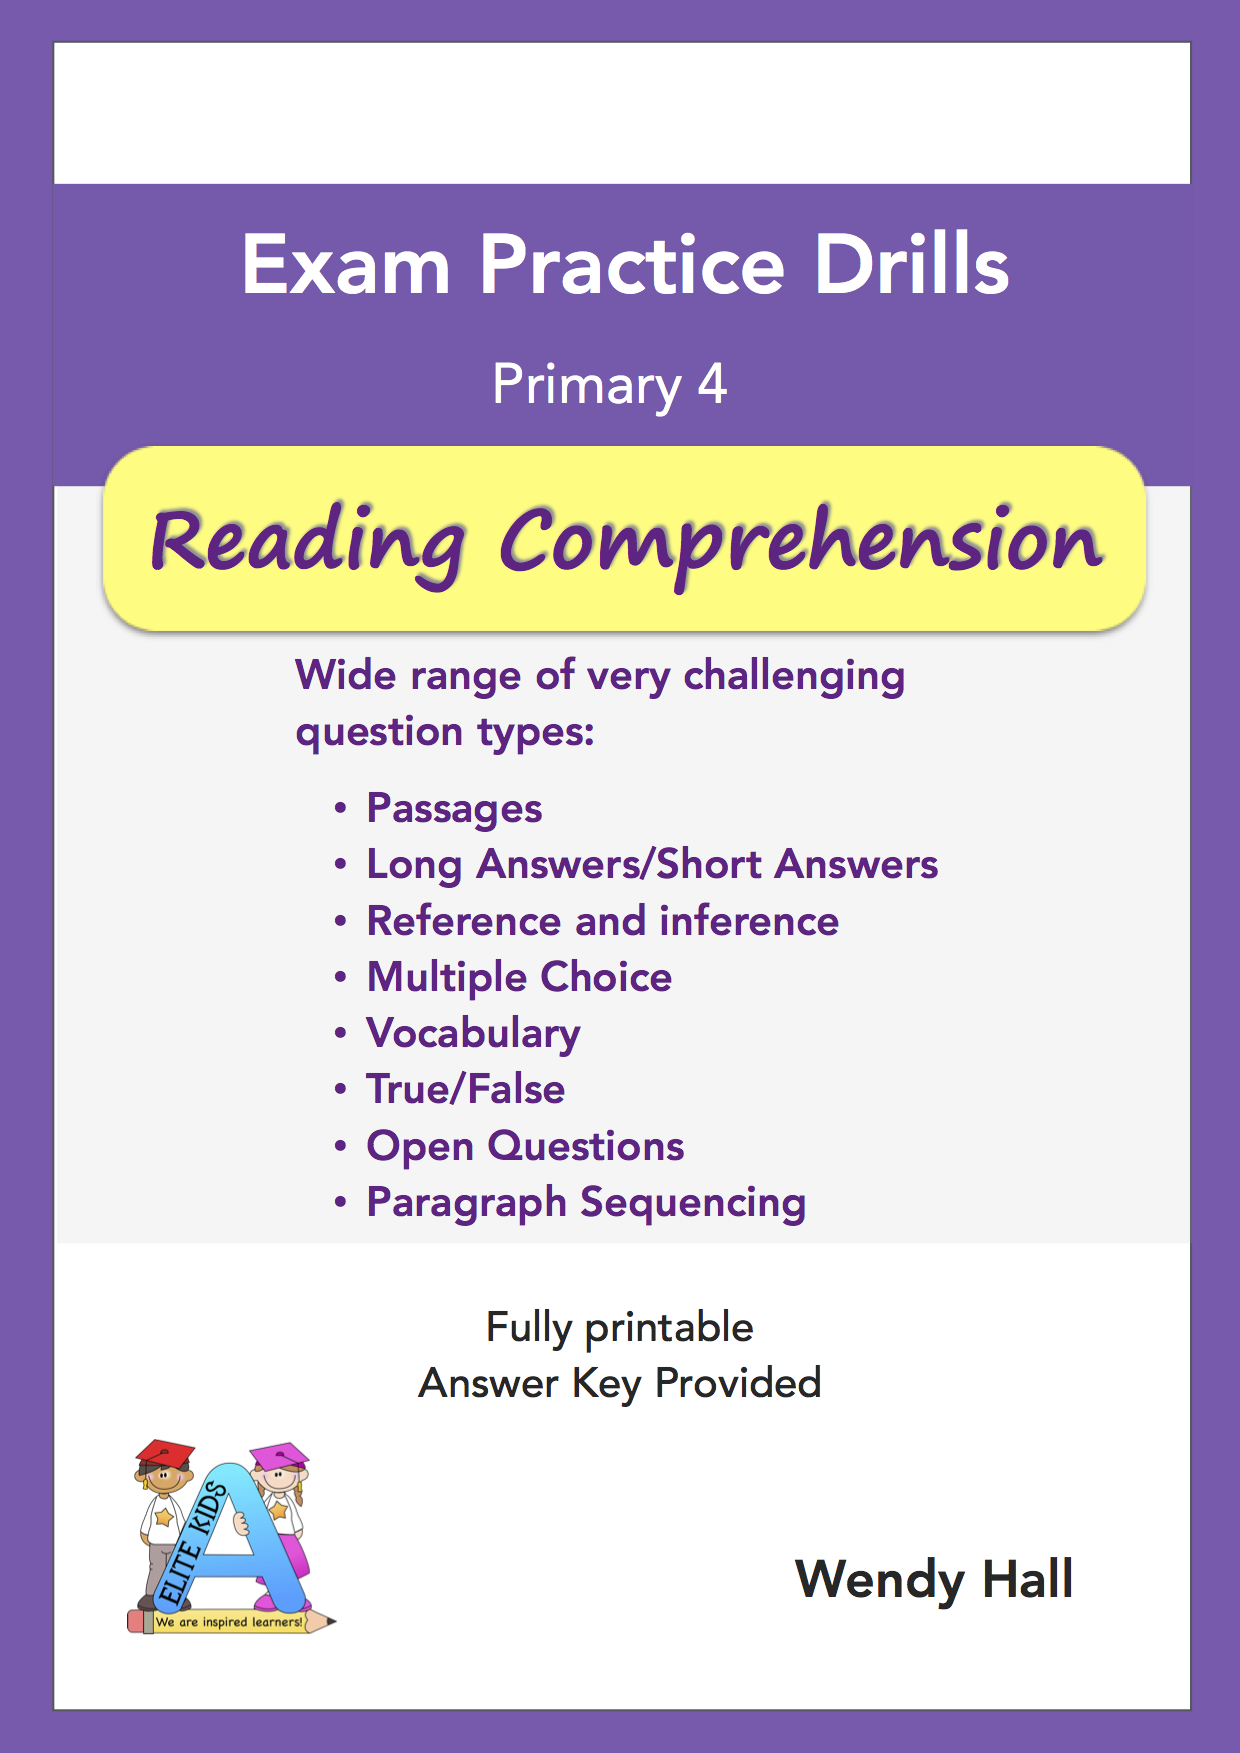 Elite Kids | Exam Practice Drills - Reading Comprehension - Primary 4